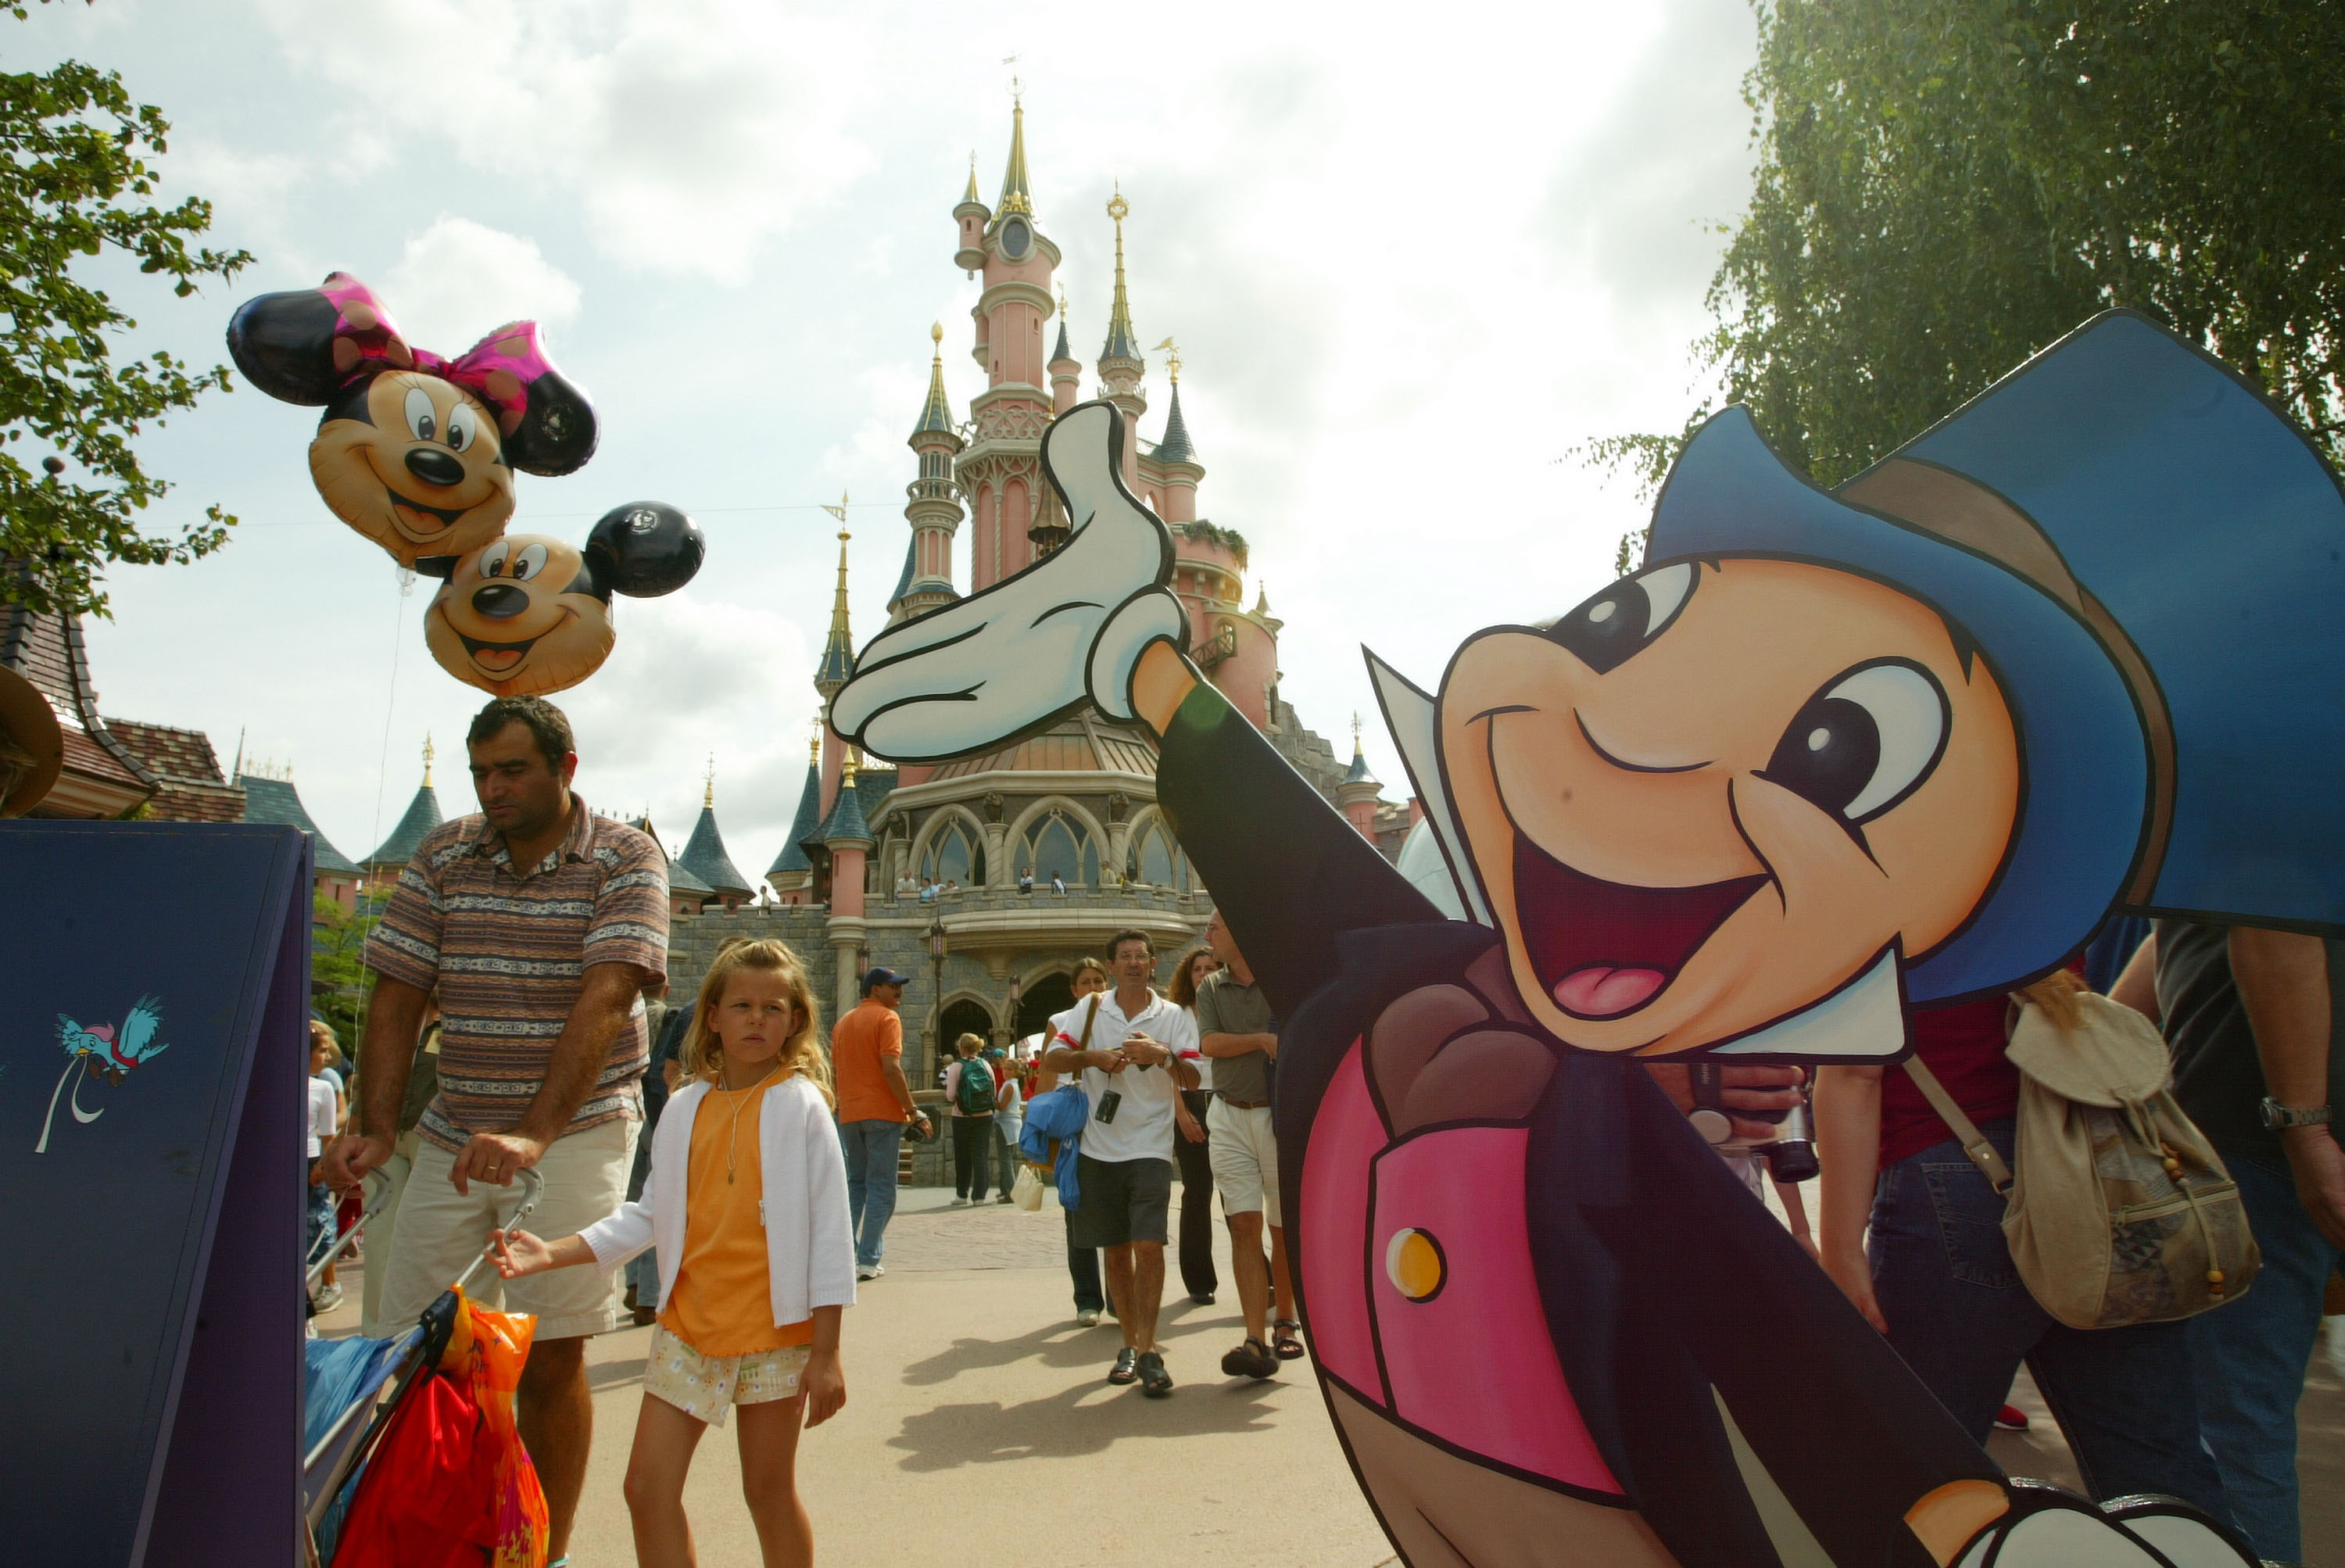 Jiminy Cricket welcomes visitors to Fantasyland in Disneyland Paris